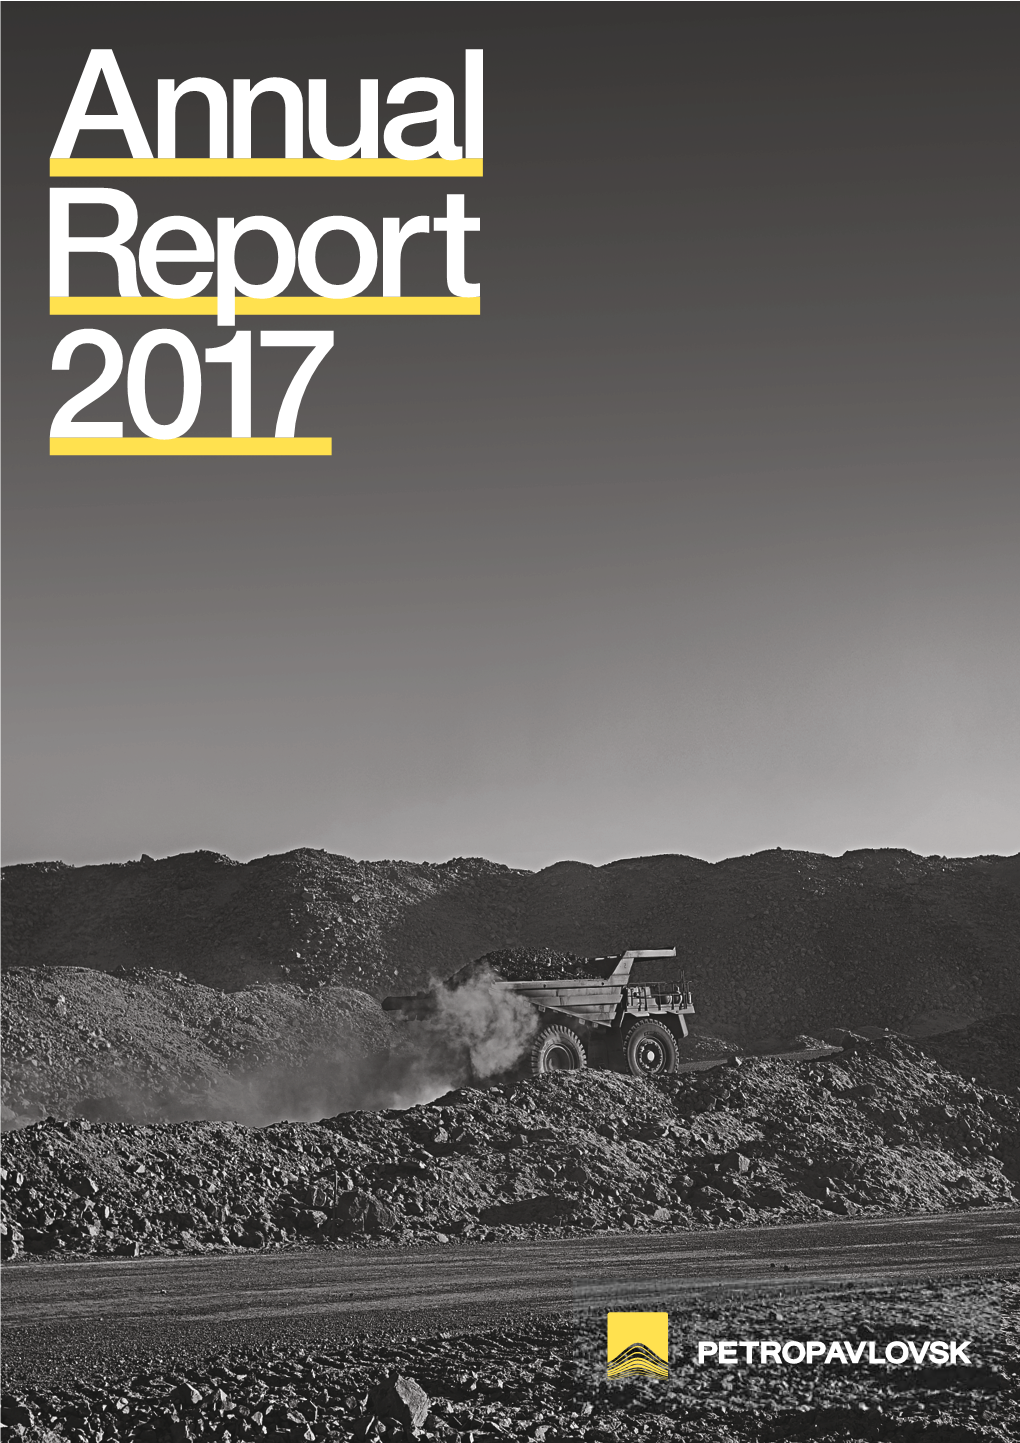 Annual 2017 Report